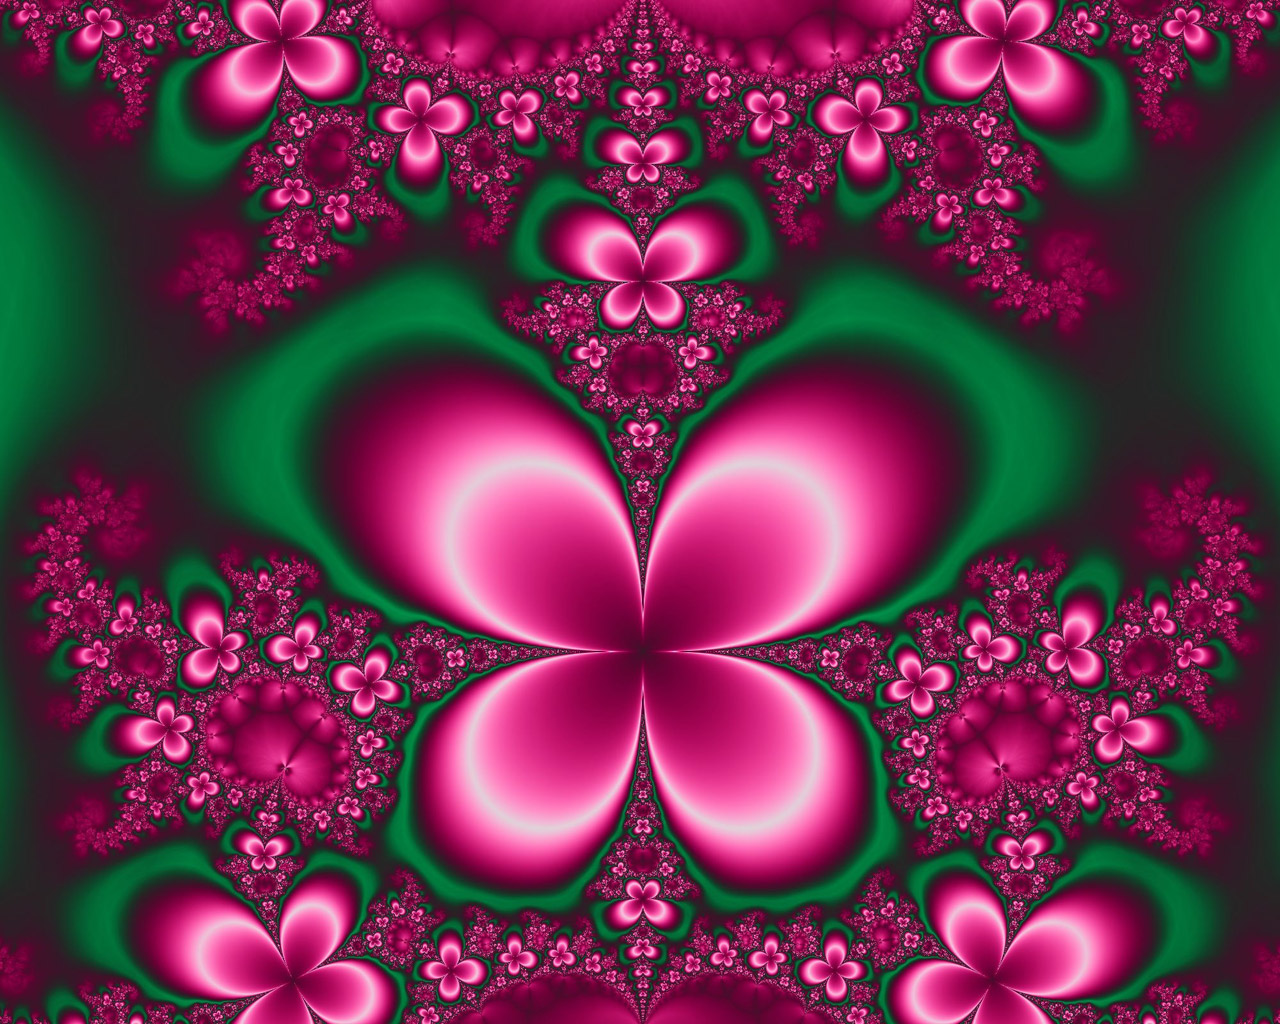 Fractal design of pink butterflies in the garden